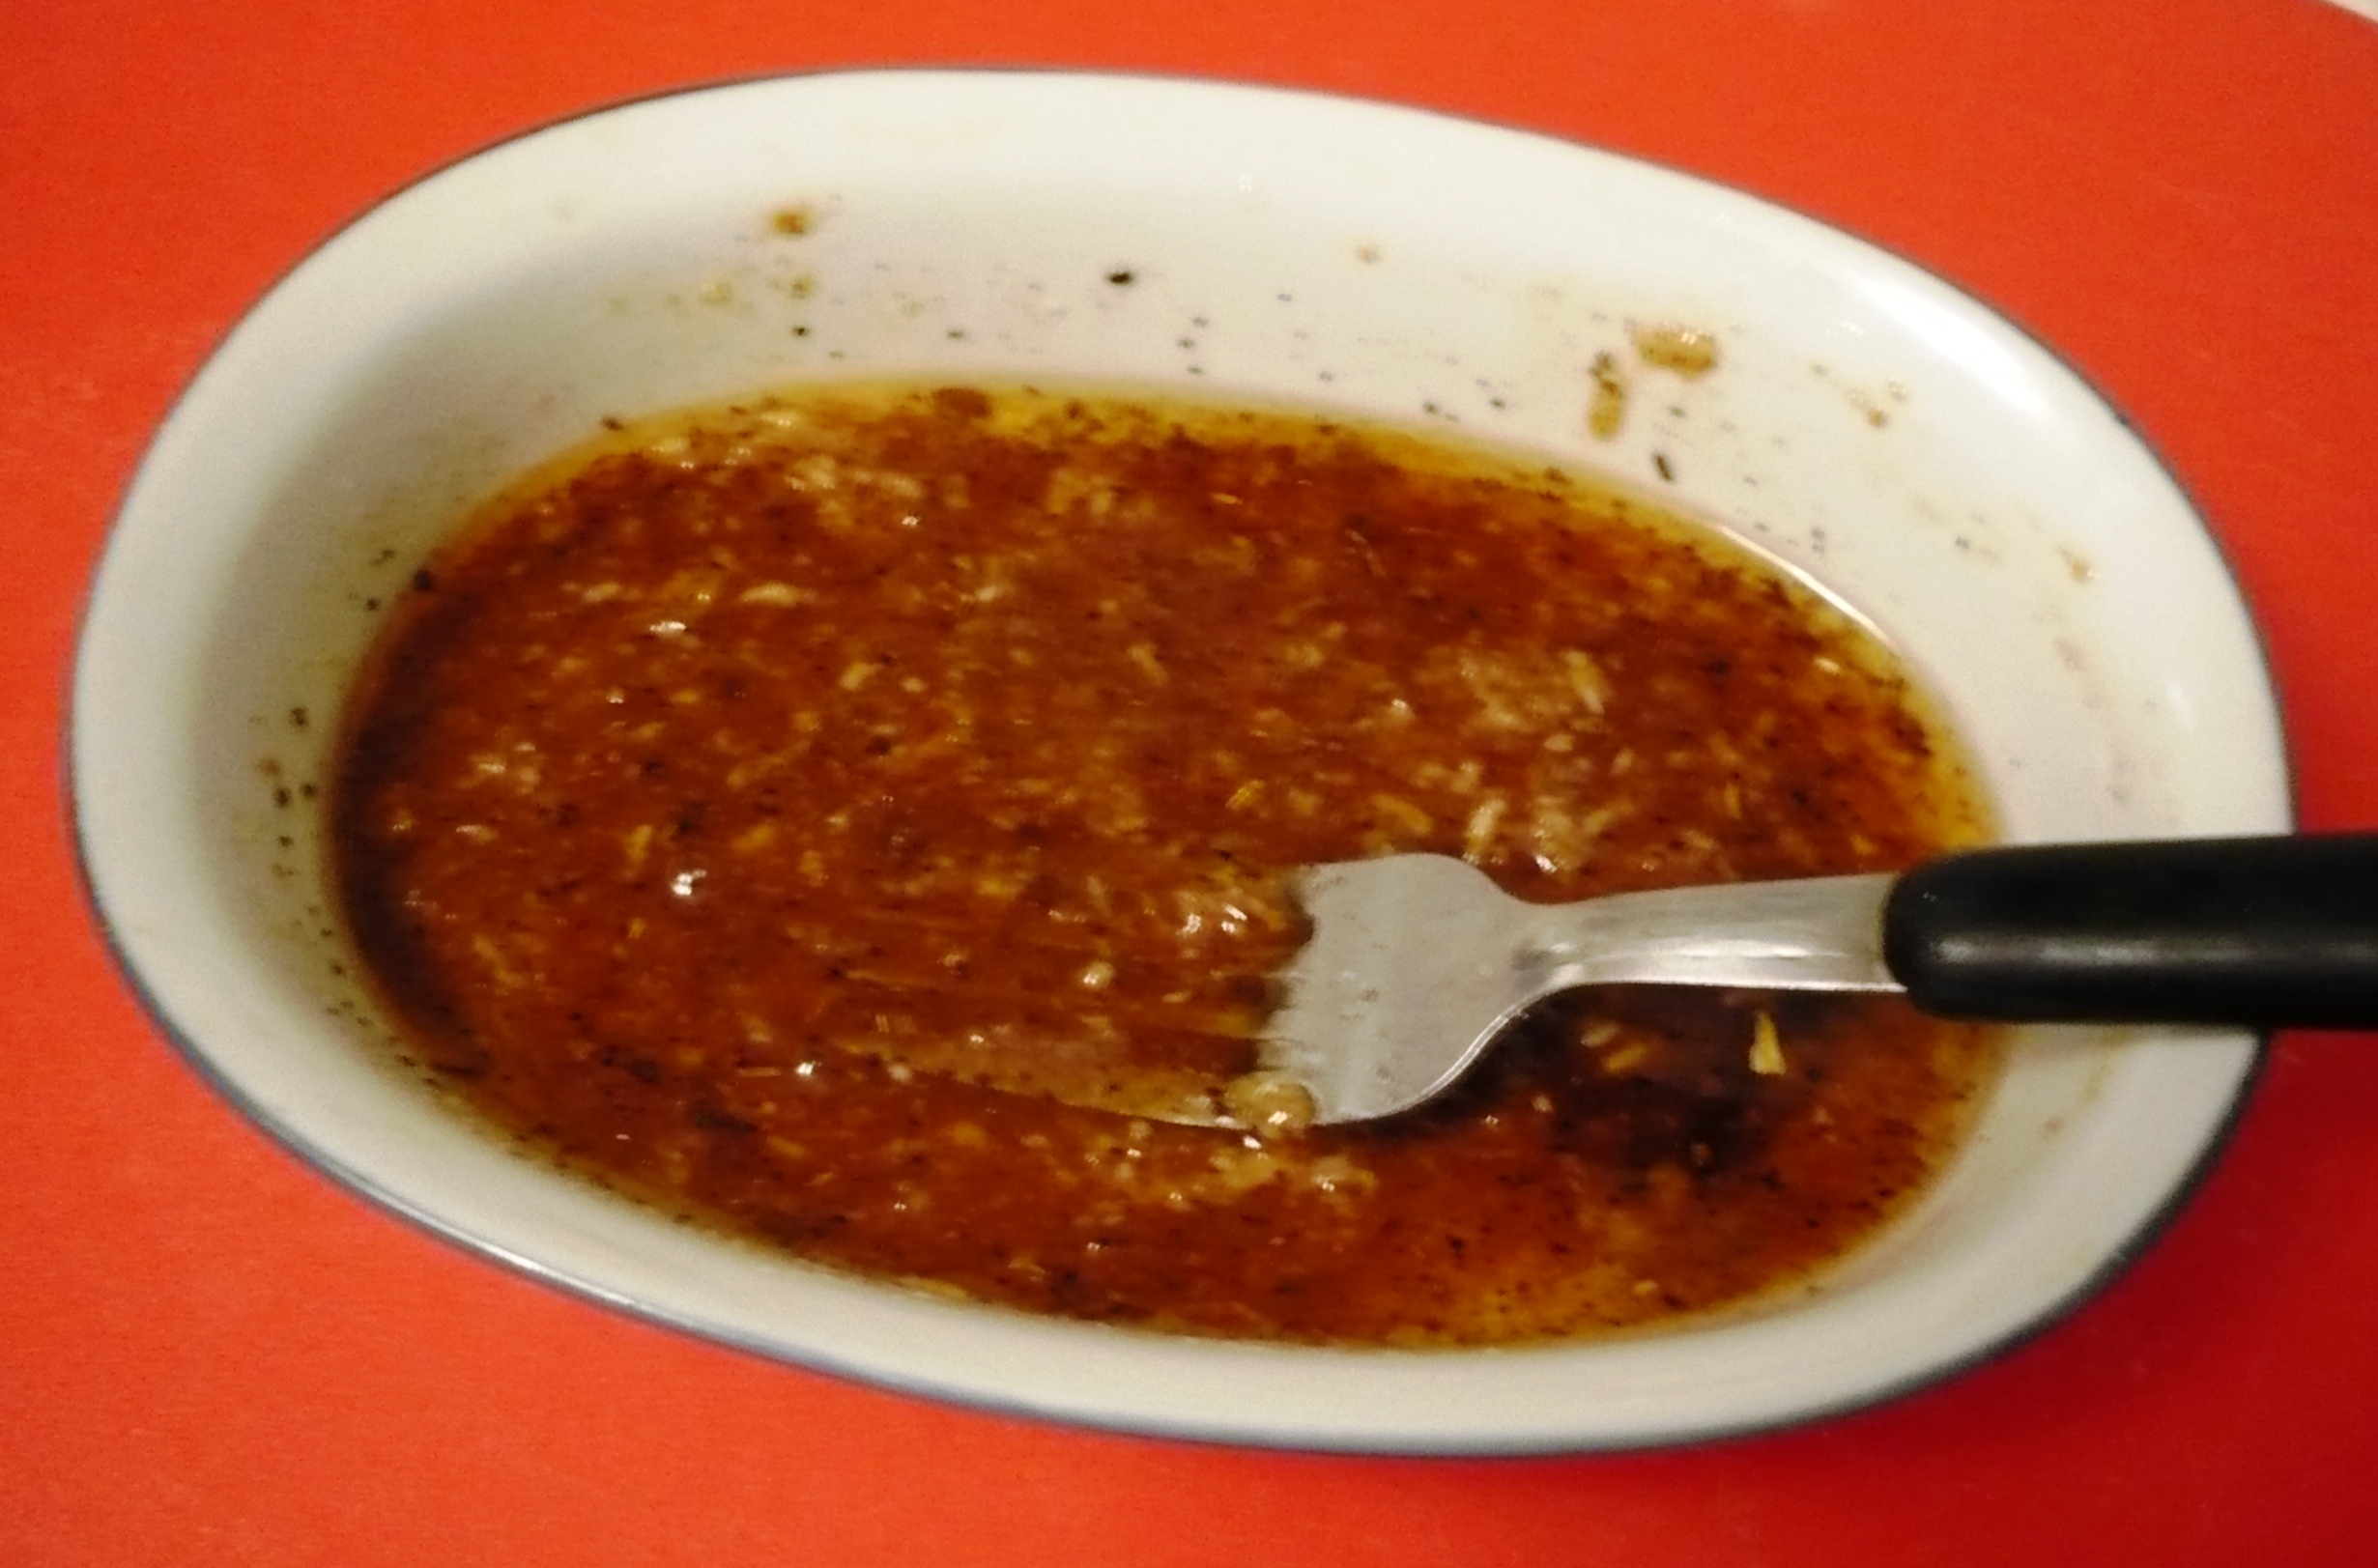 Česnekovo-medová marináda na vepřové maso